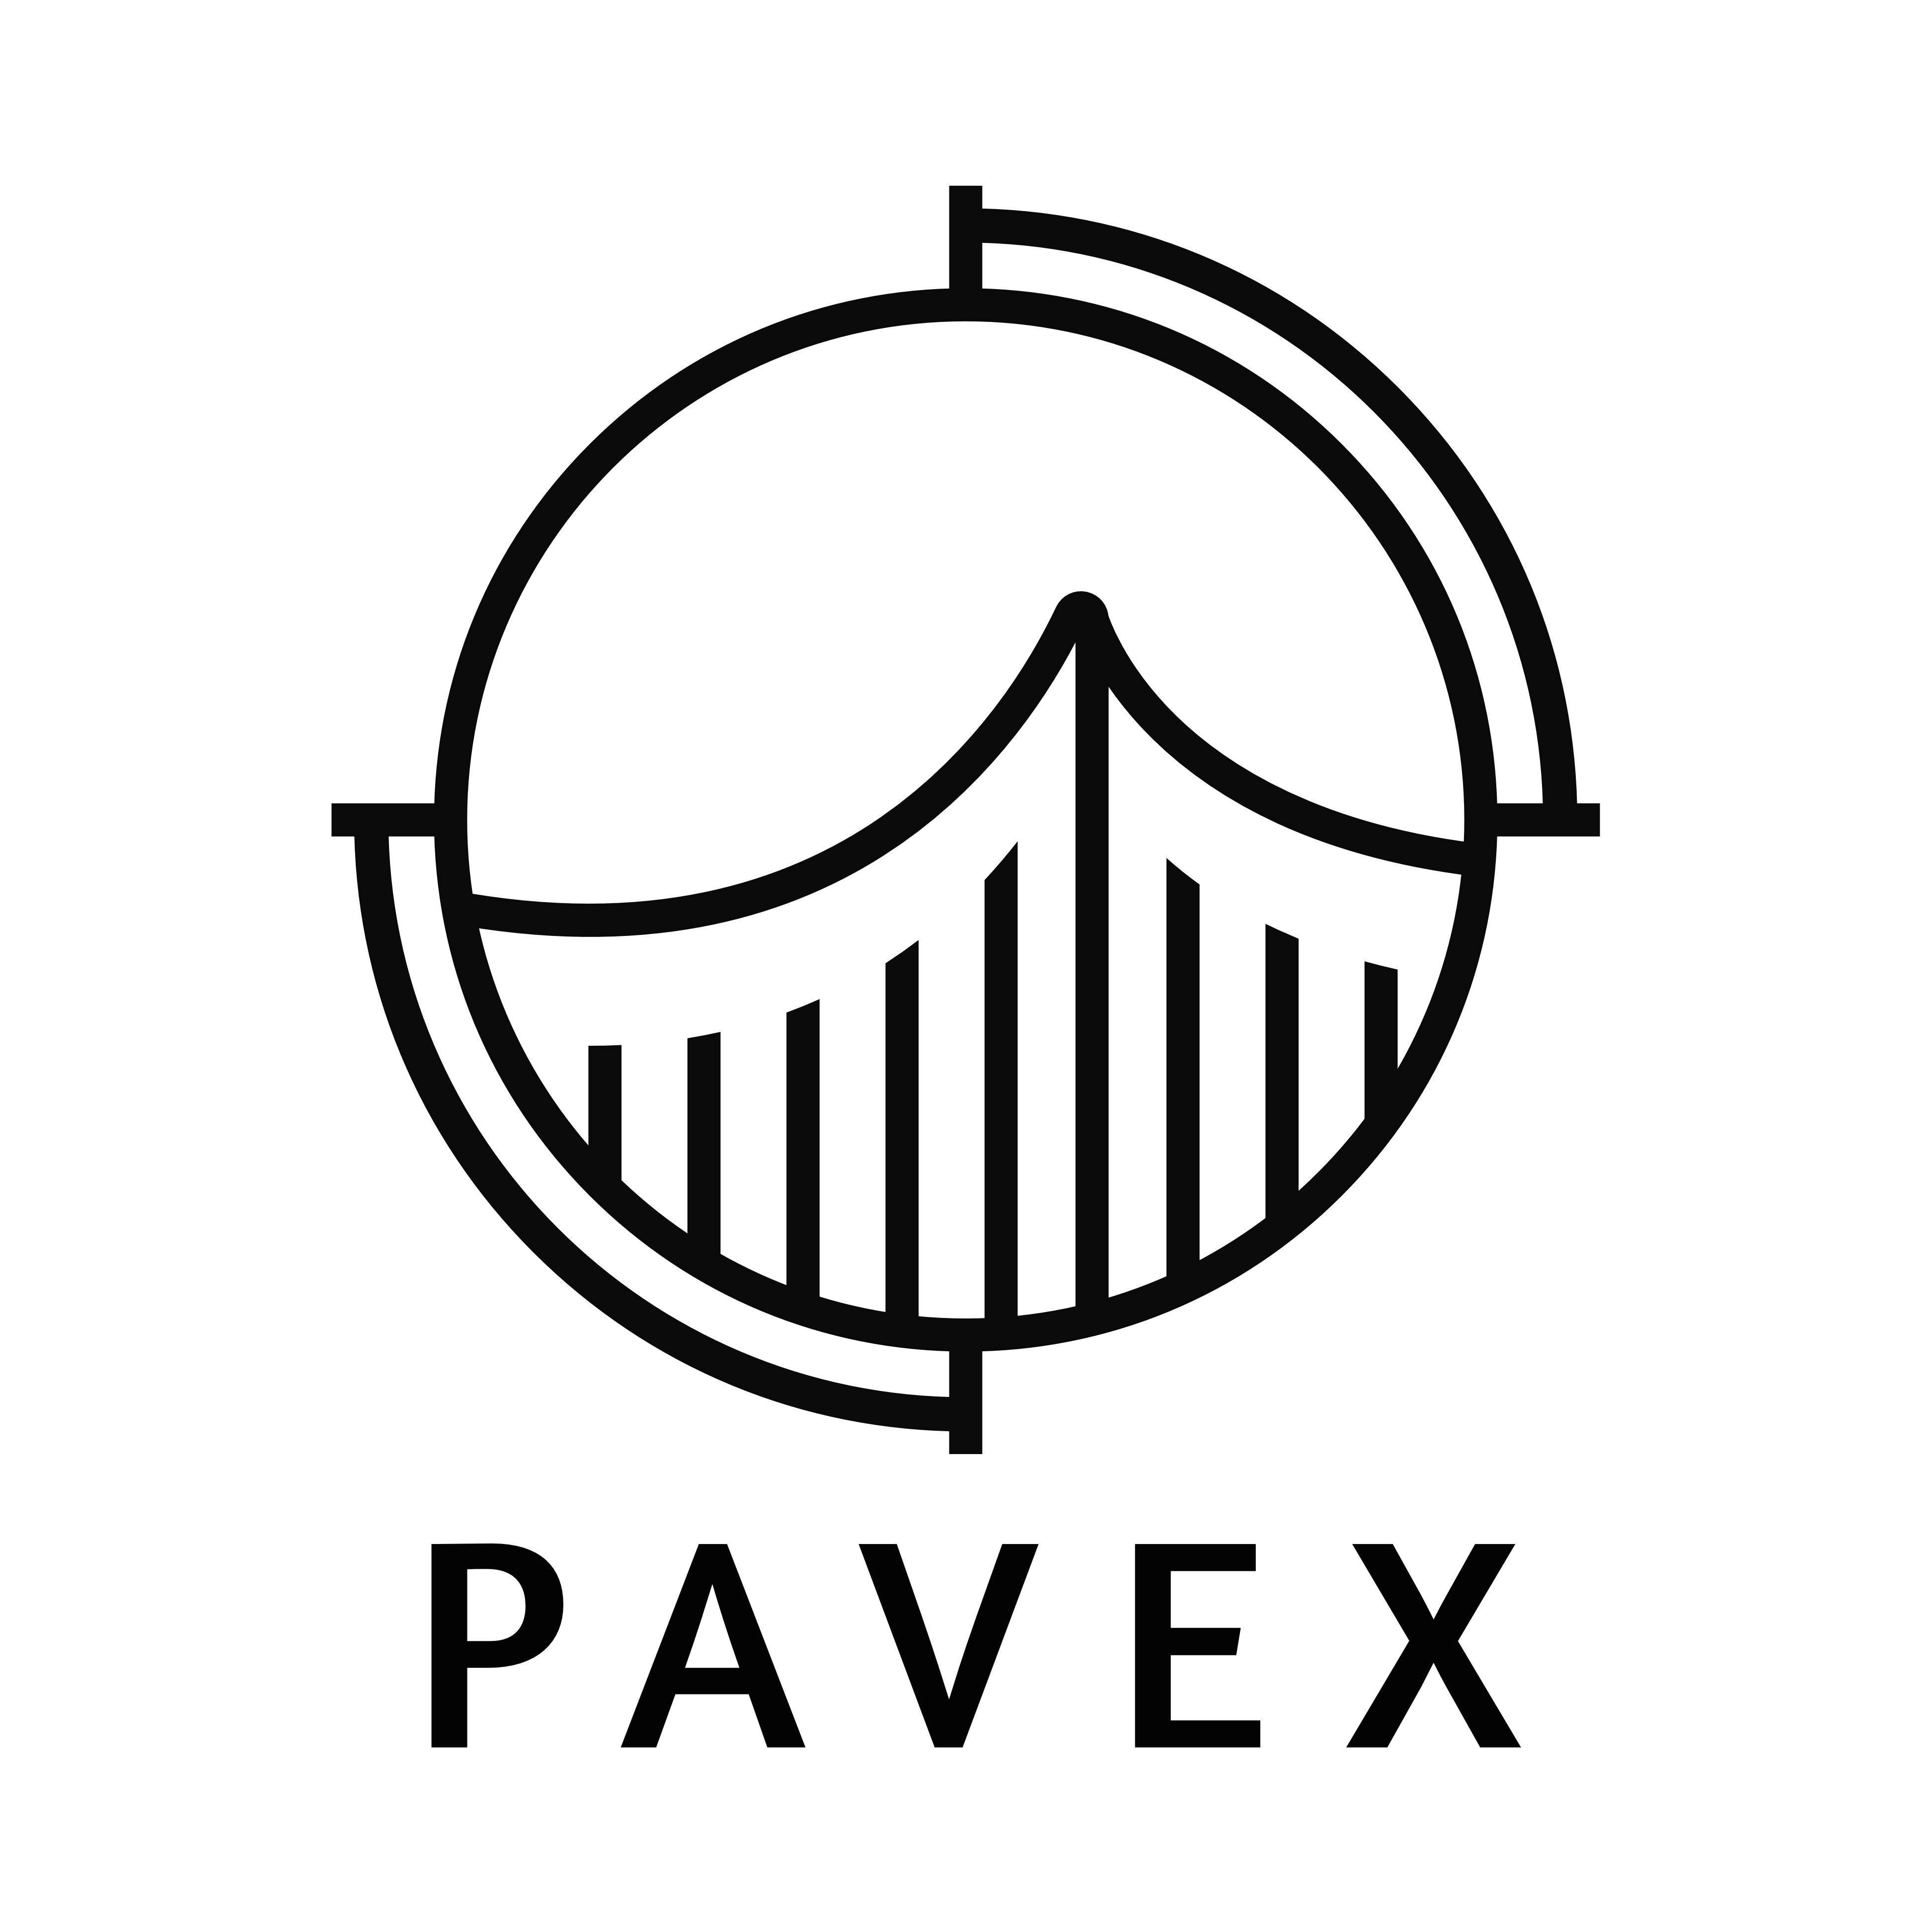 Pavex's new logo